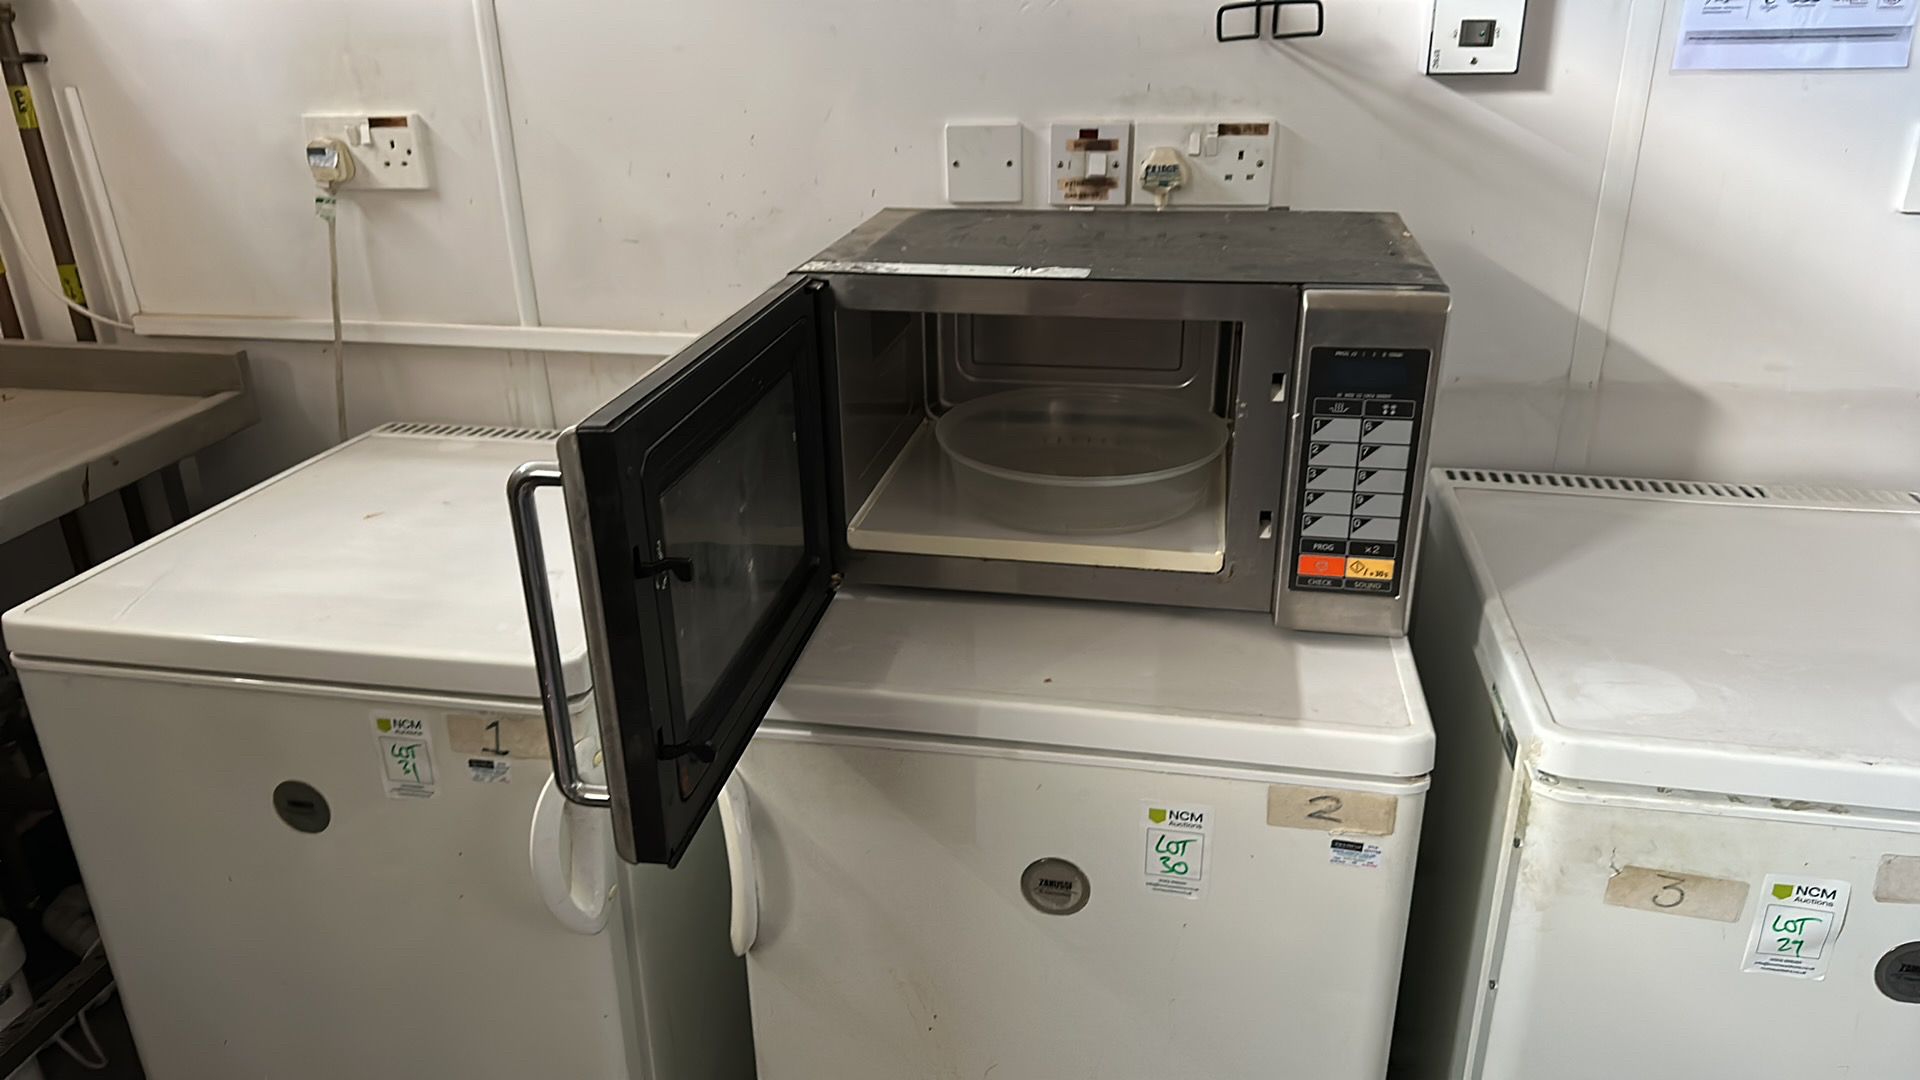 Samsung Kitchen Microwave - Image 4 of 4